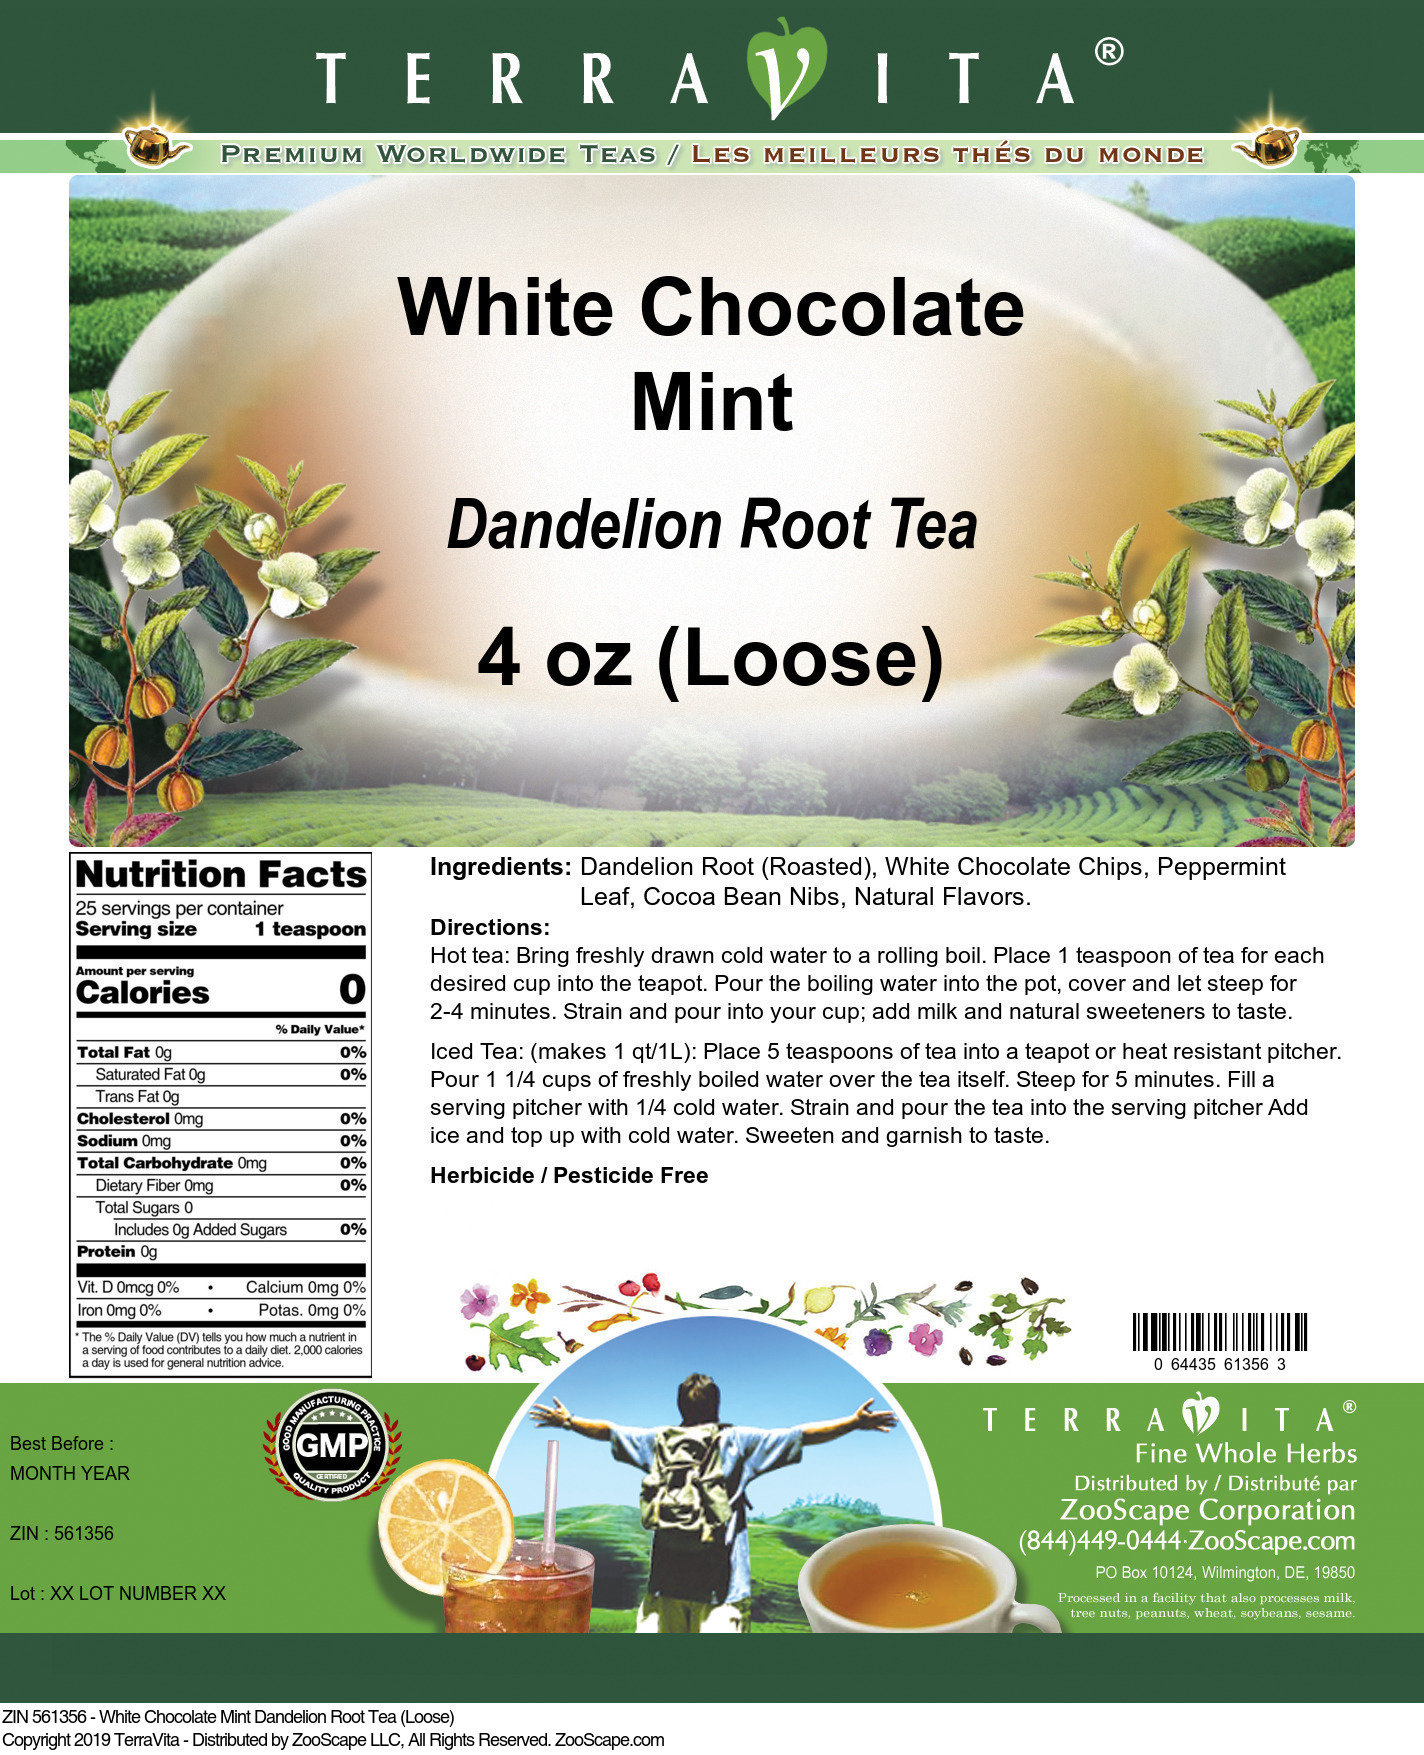 White Chocolate Mint Dandelion Root Tea (Loose) - Label